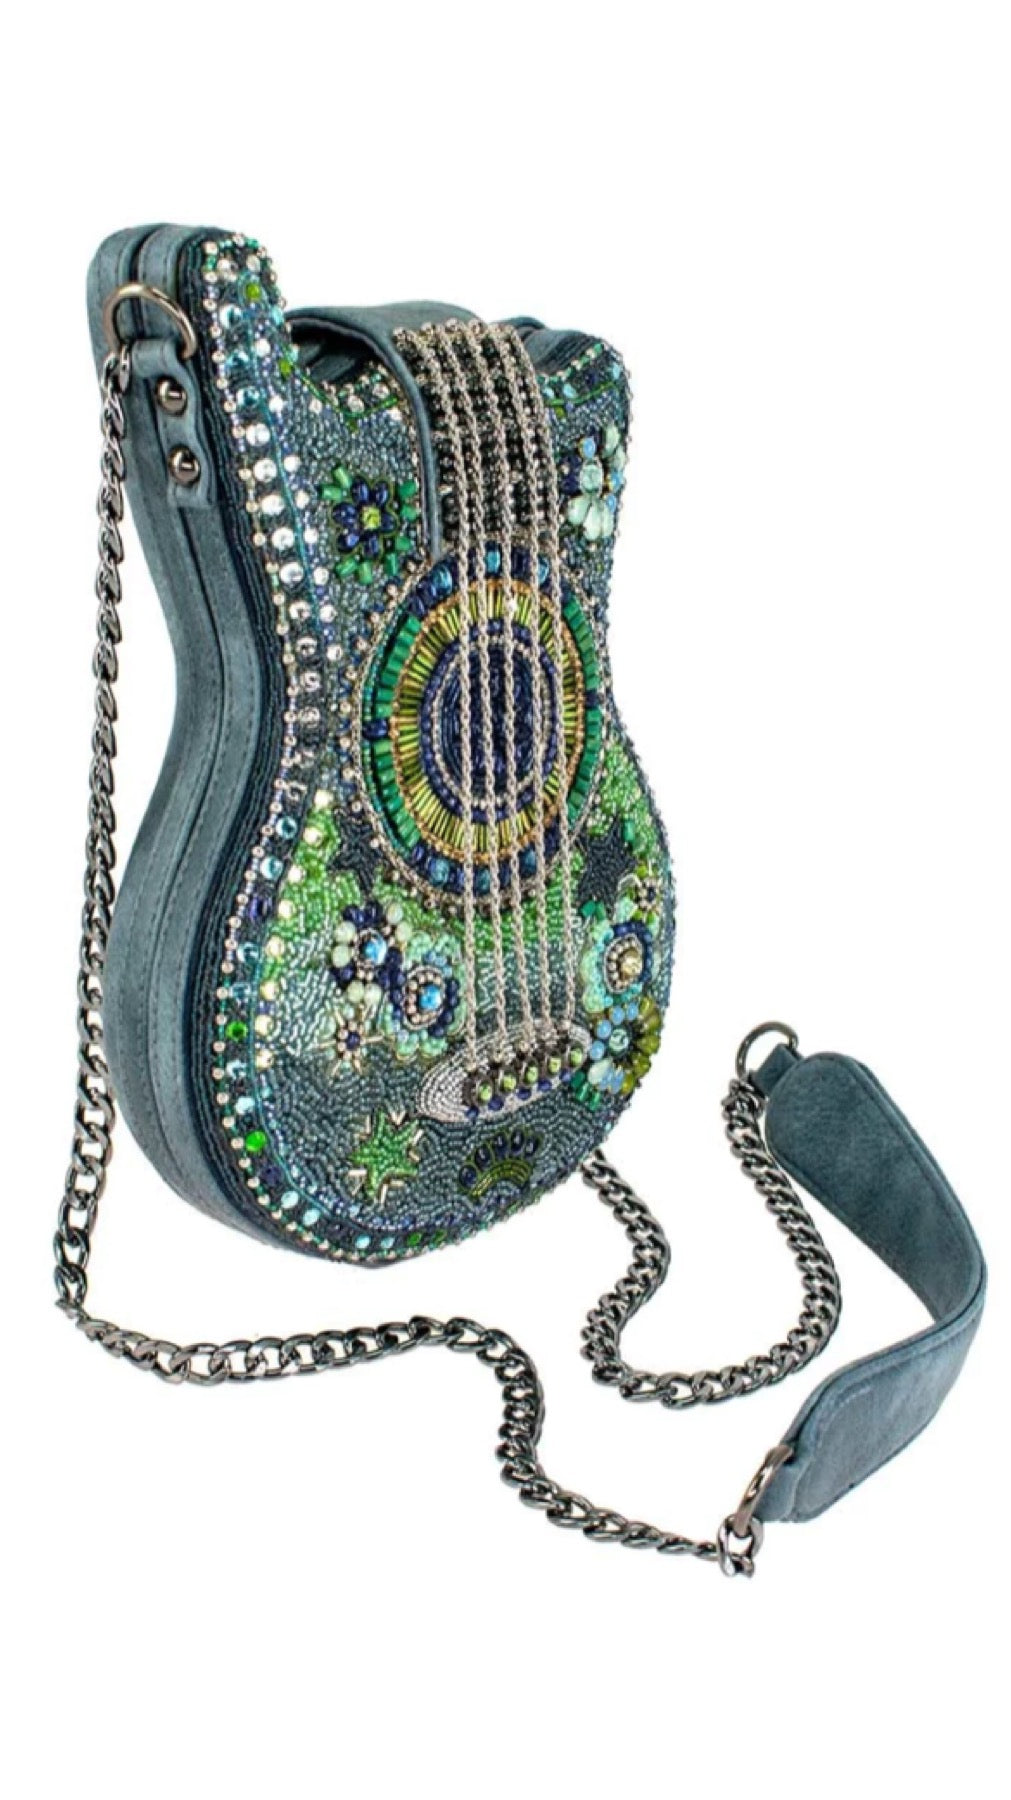 Mary Frances Scarlet Guitar Handbag   Mary Frances Beaded Bag